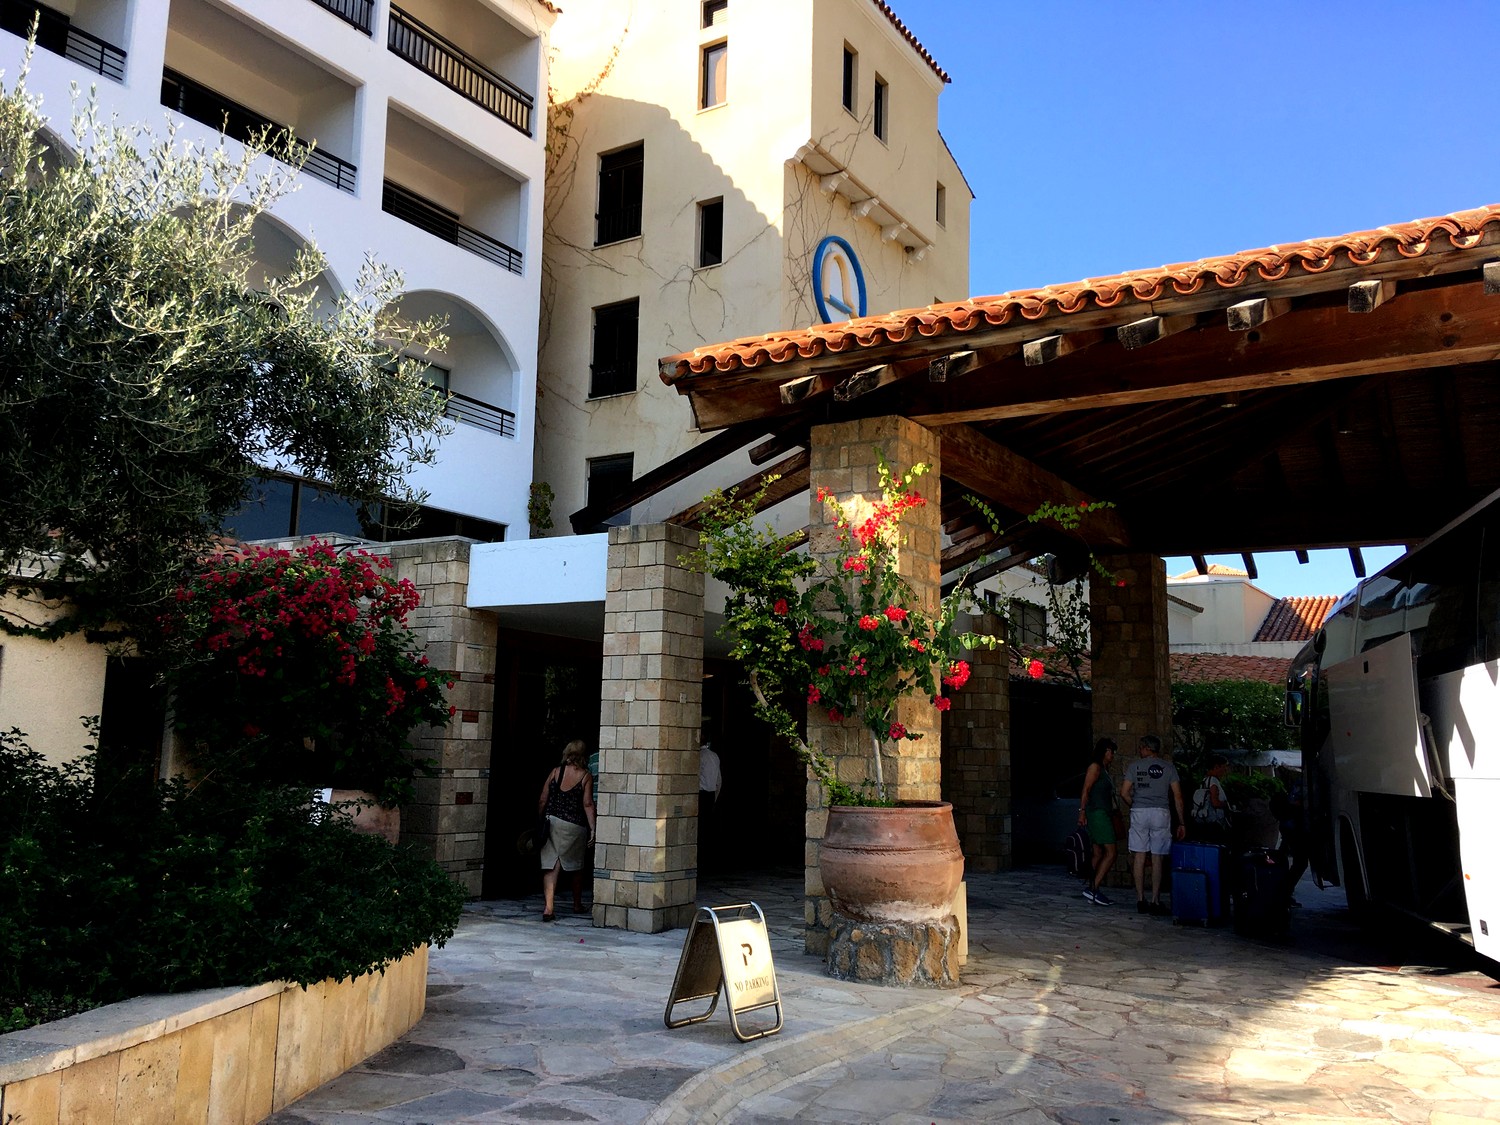 Coral Beach Hotel & Resort Cyprus 5*